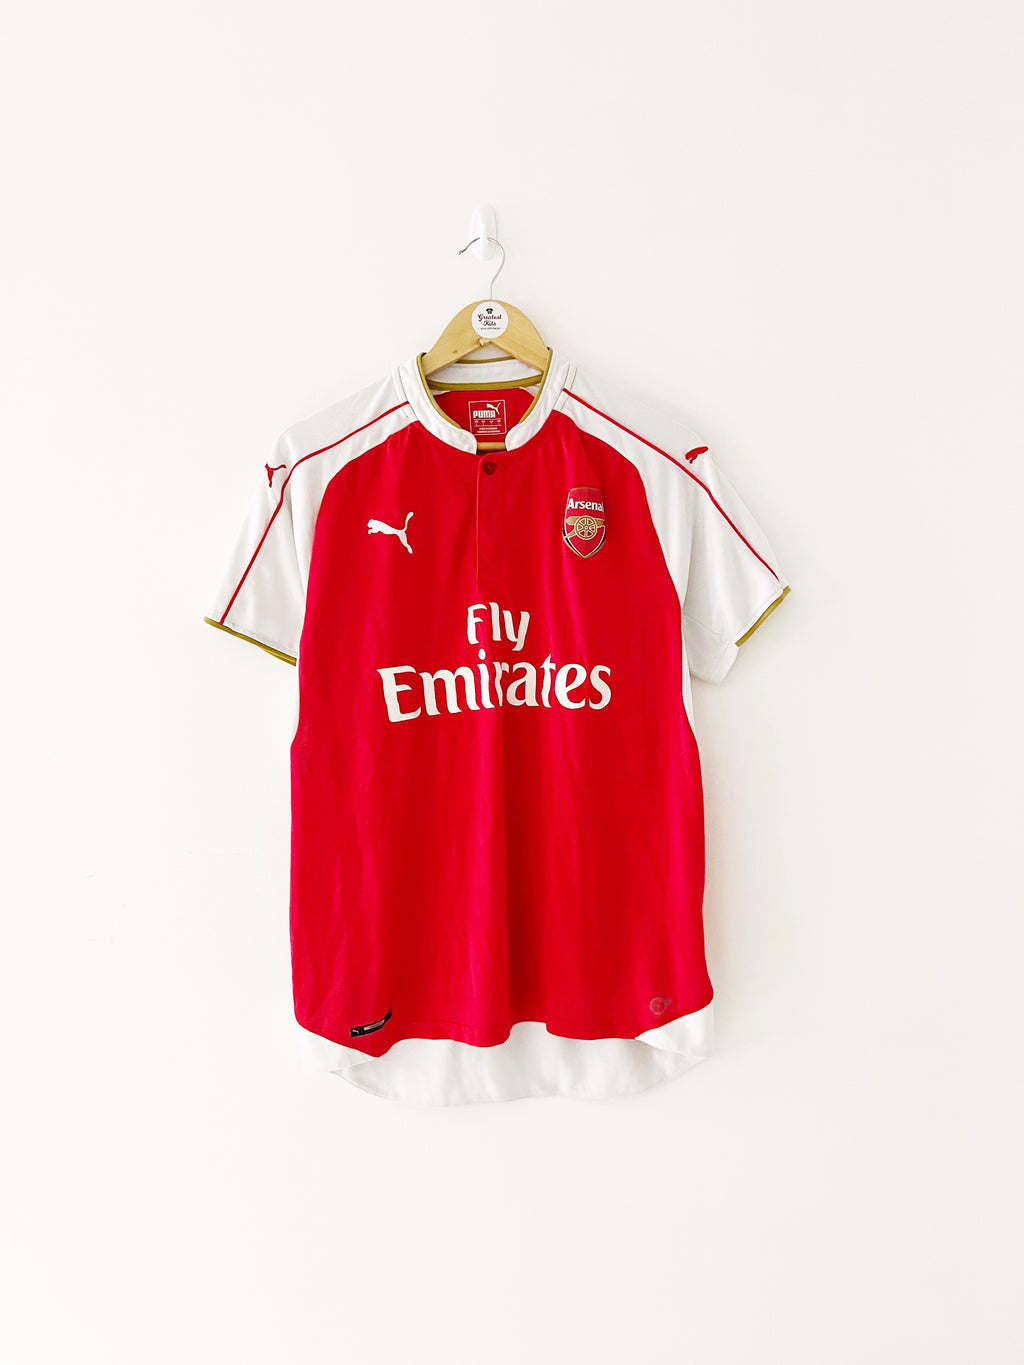 2017/18 Arsenal Home Shirt (L) 8.5/10